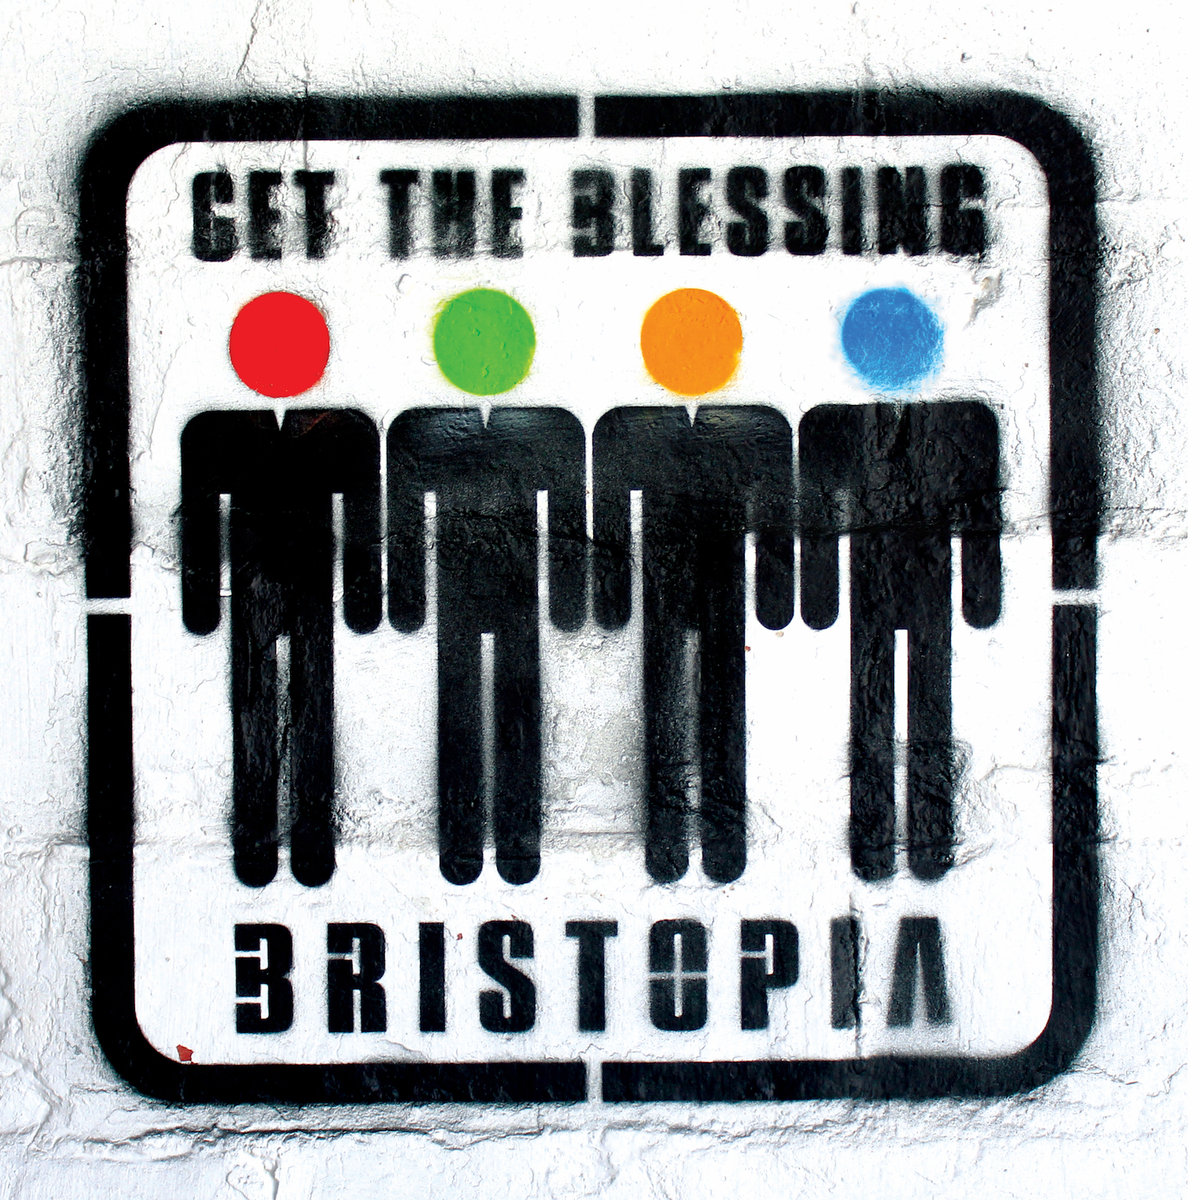 Get The Blessing - Bristopia (Kartel)